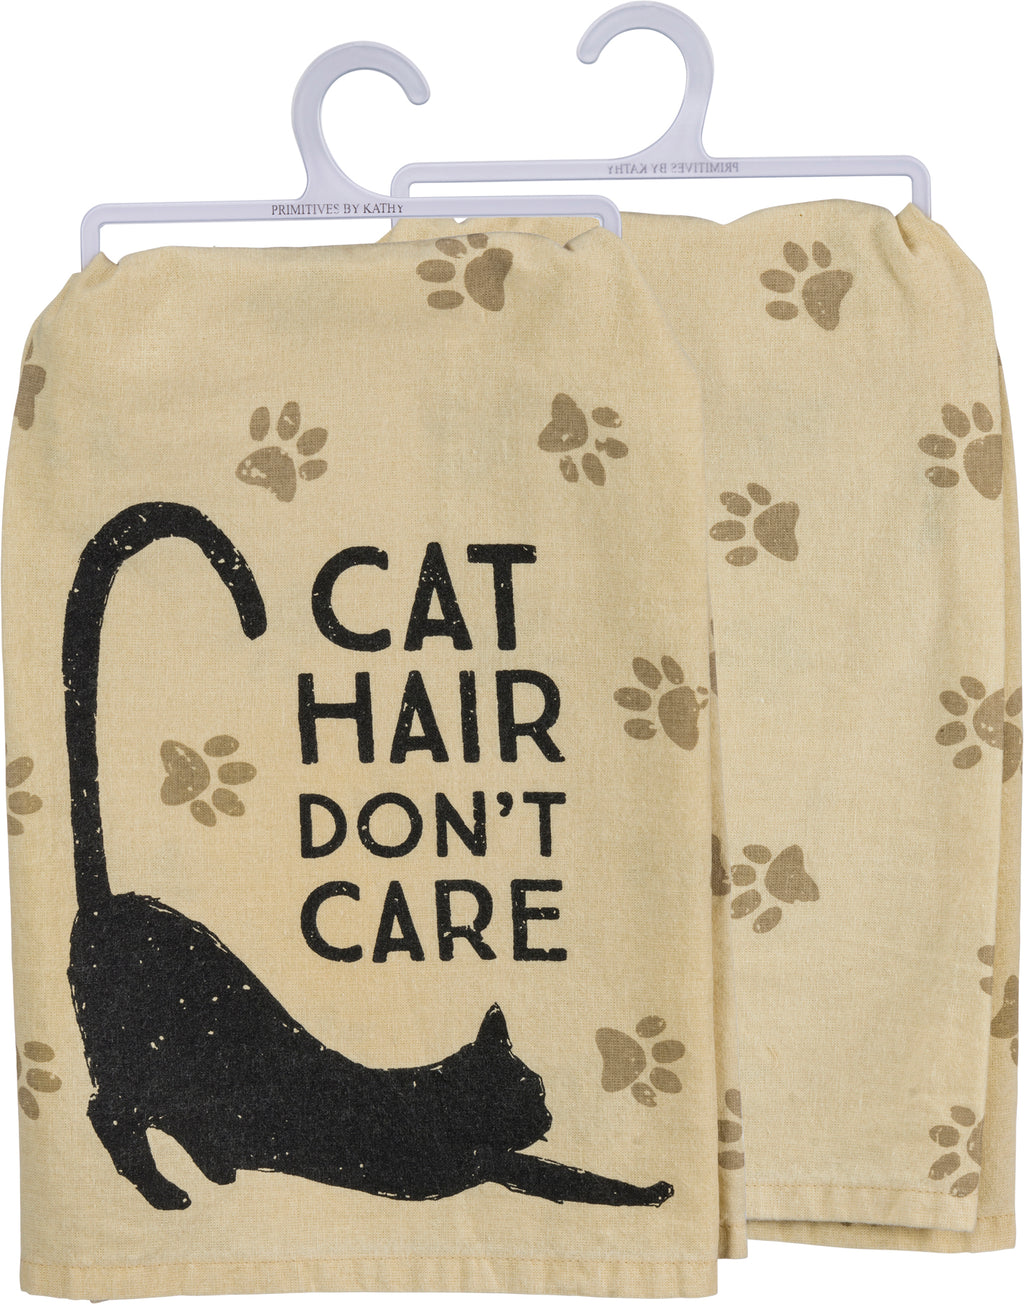 Primitives by Kathy Flour Sac Towel - Cat Hair